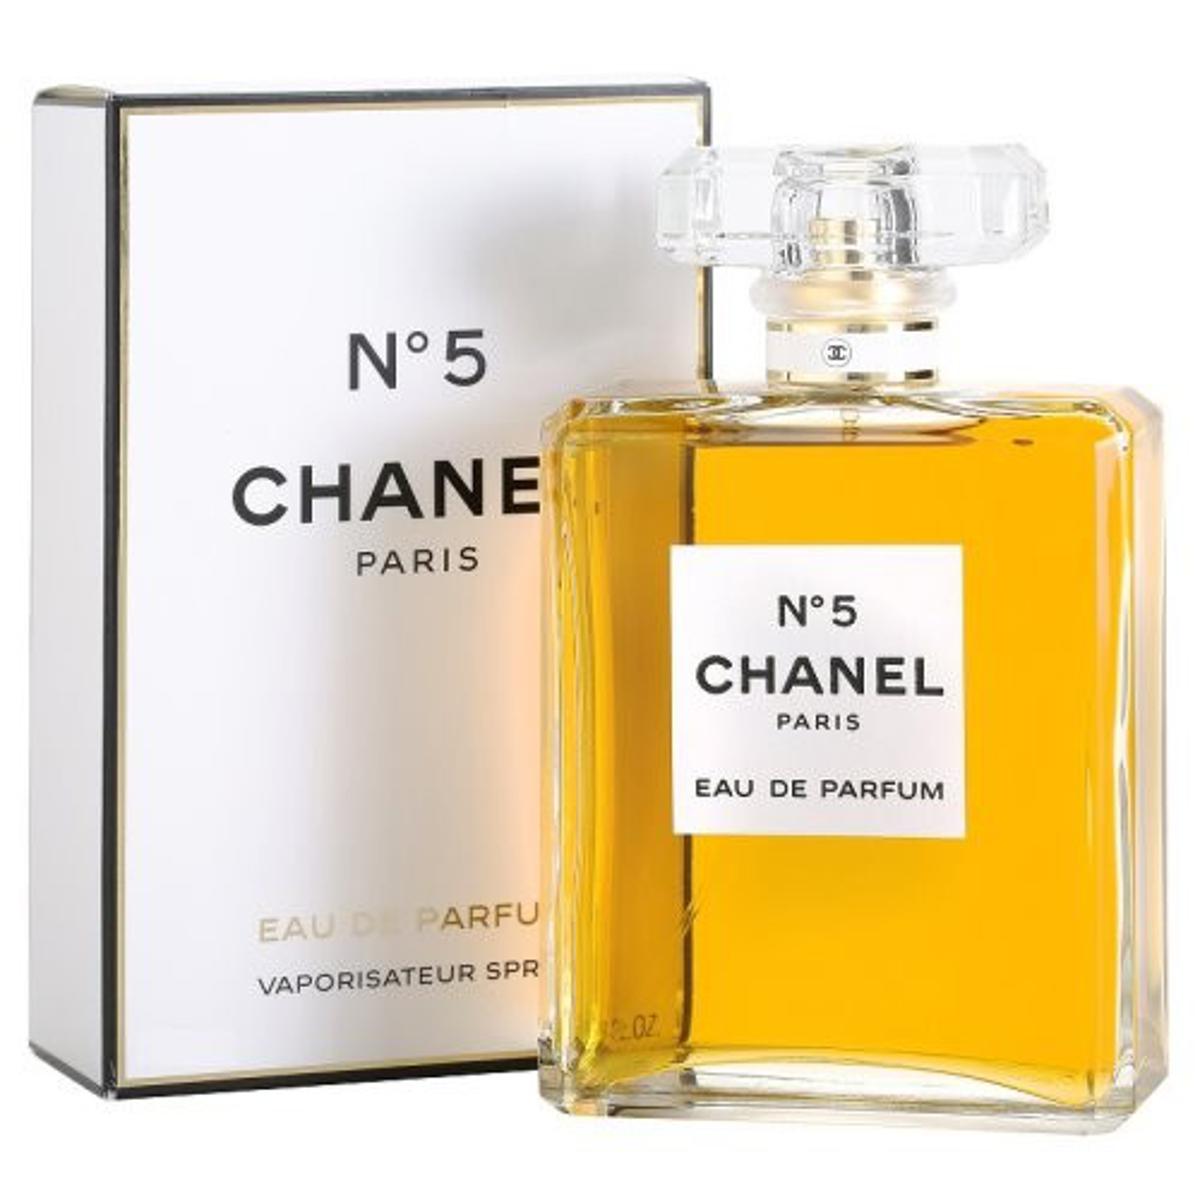 N5 Chanel Paris Perfume 100ml Price in Pakistan